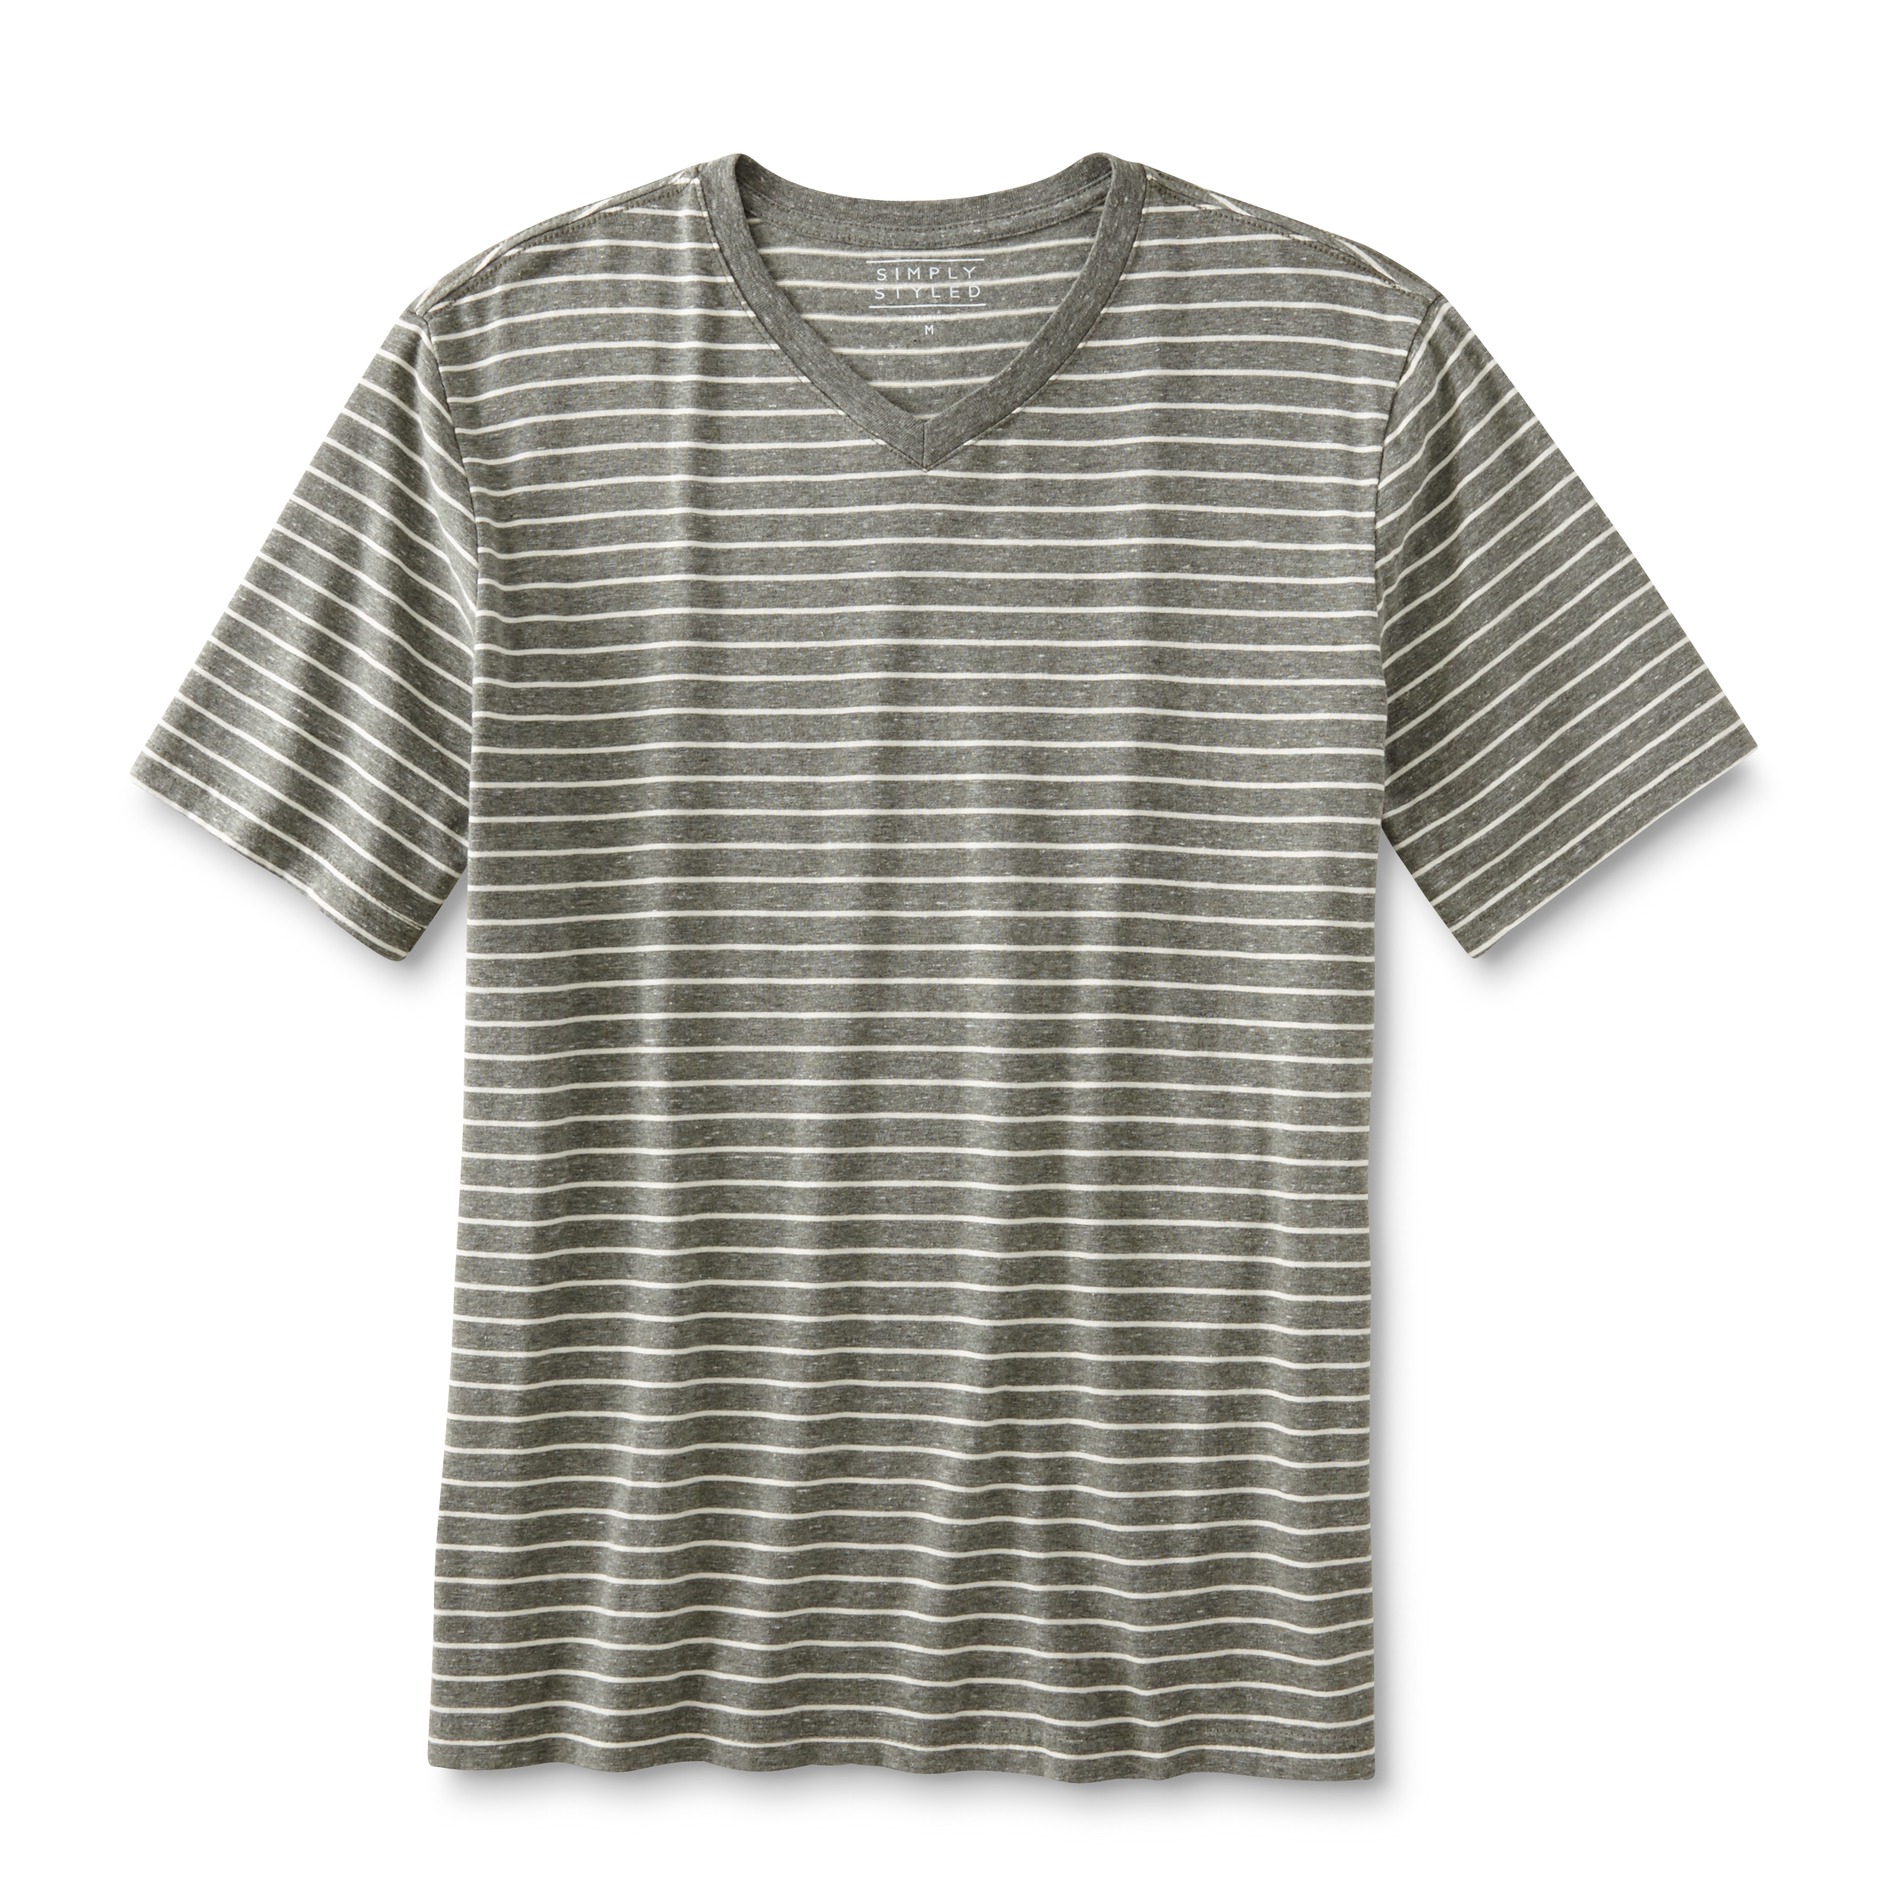 Simply Styled Men's Big & Tall V-Neck T-Shirt - Striped